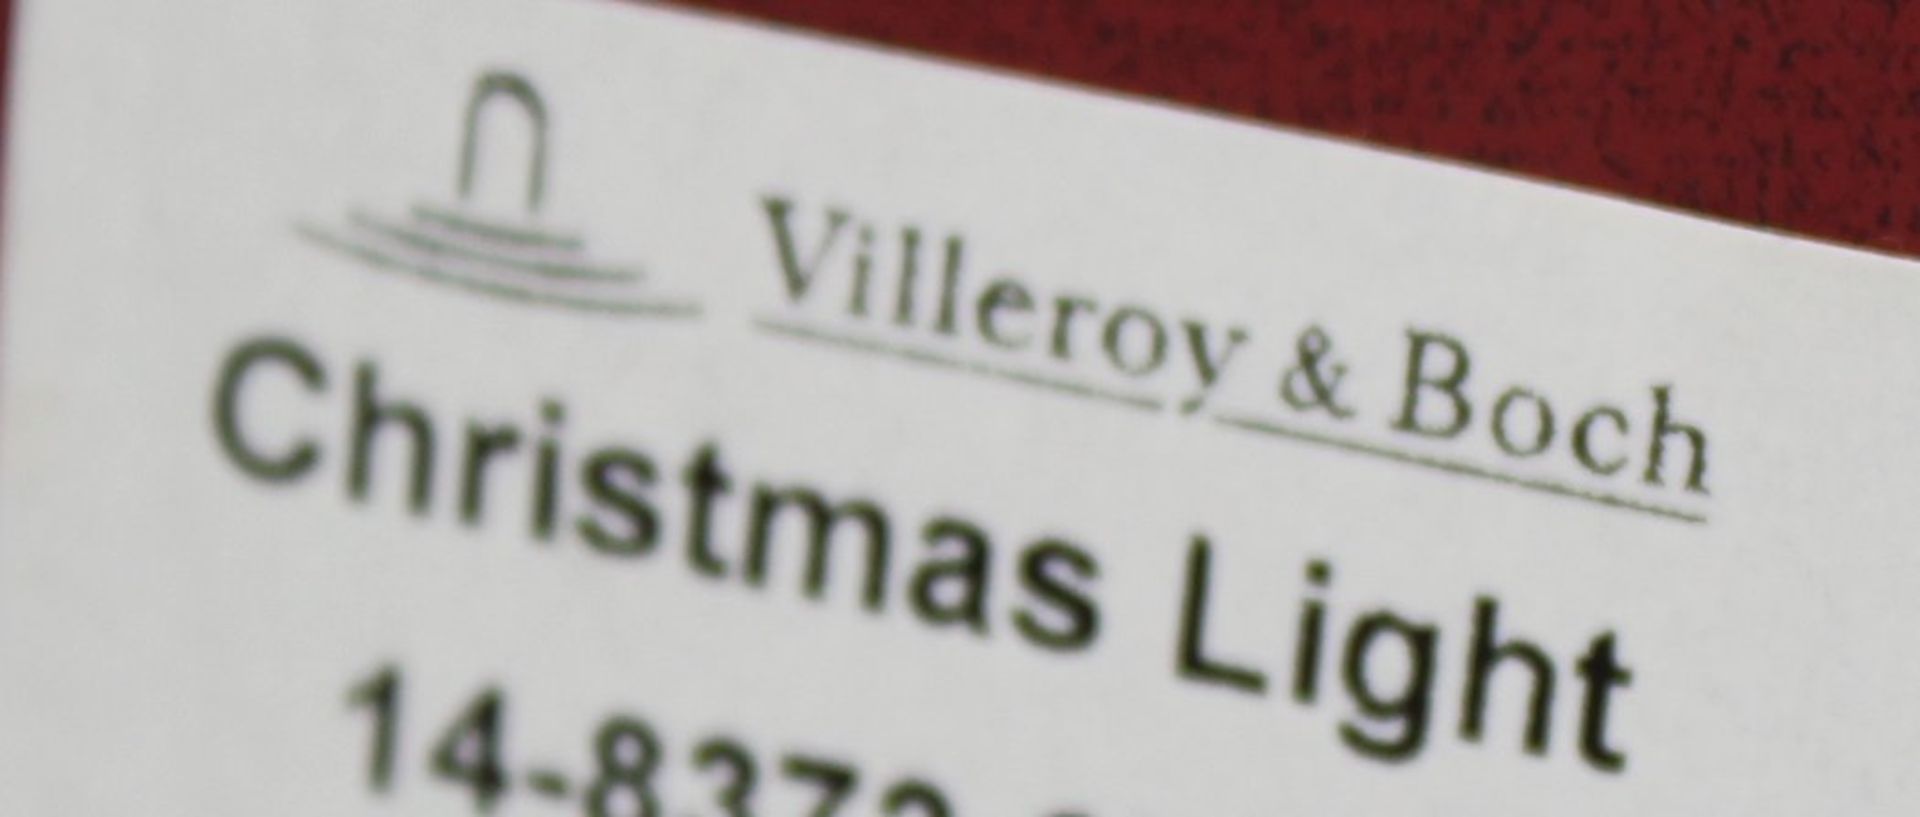 Villeroy & Boch Weihnachtsleuchter, OVP, ca. H-12,5cm. - Image 2 of 2